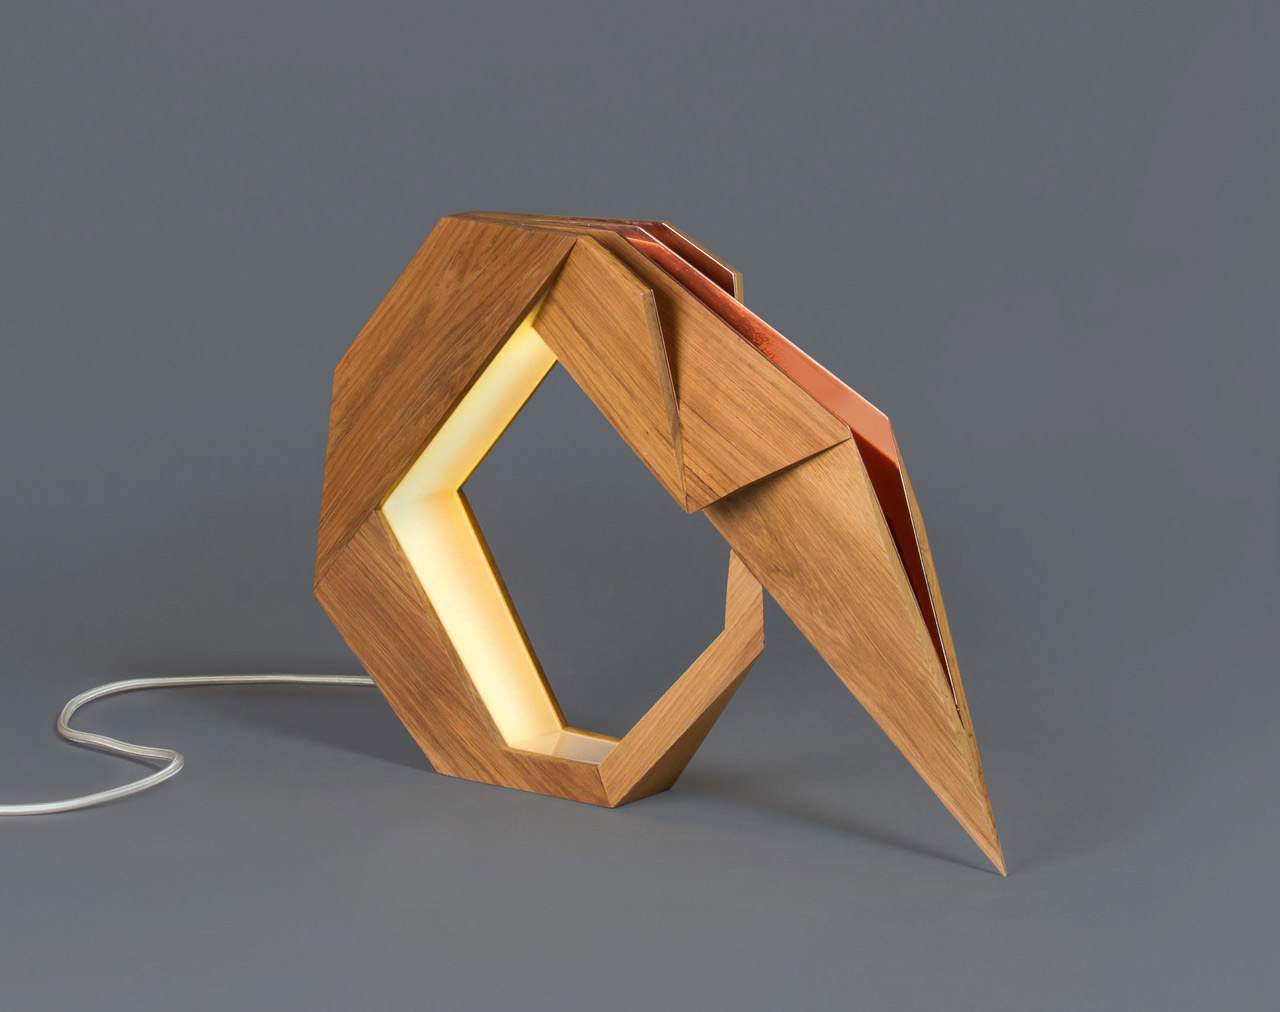 Nábytek Oru Series čerpá inspiraci z origami